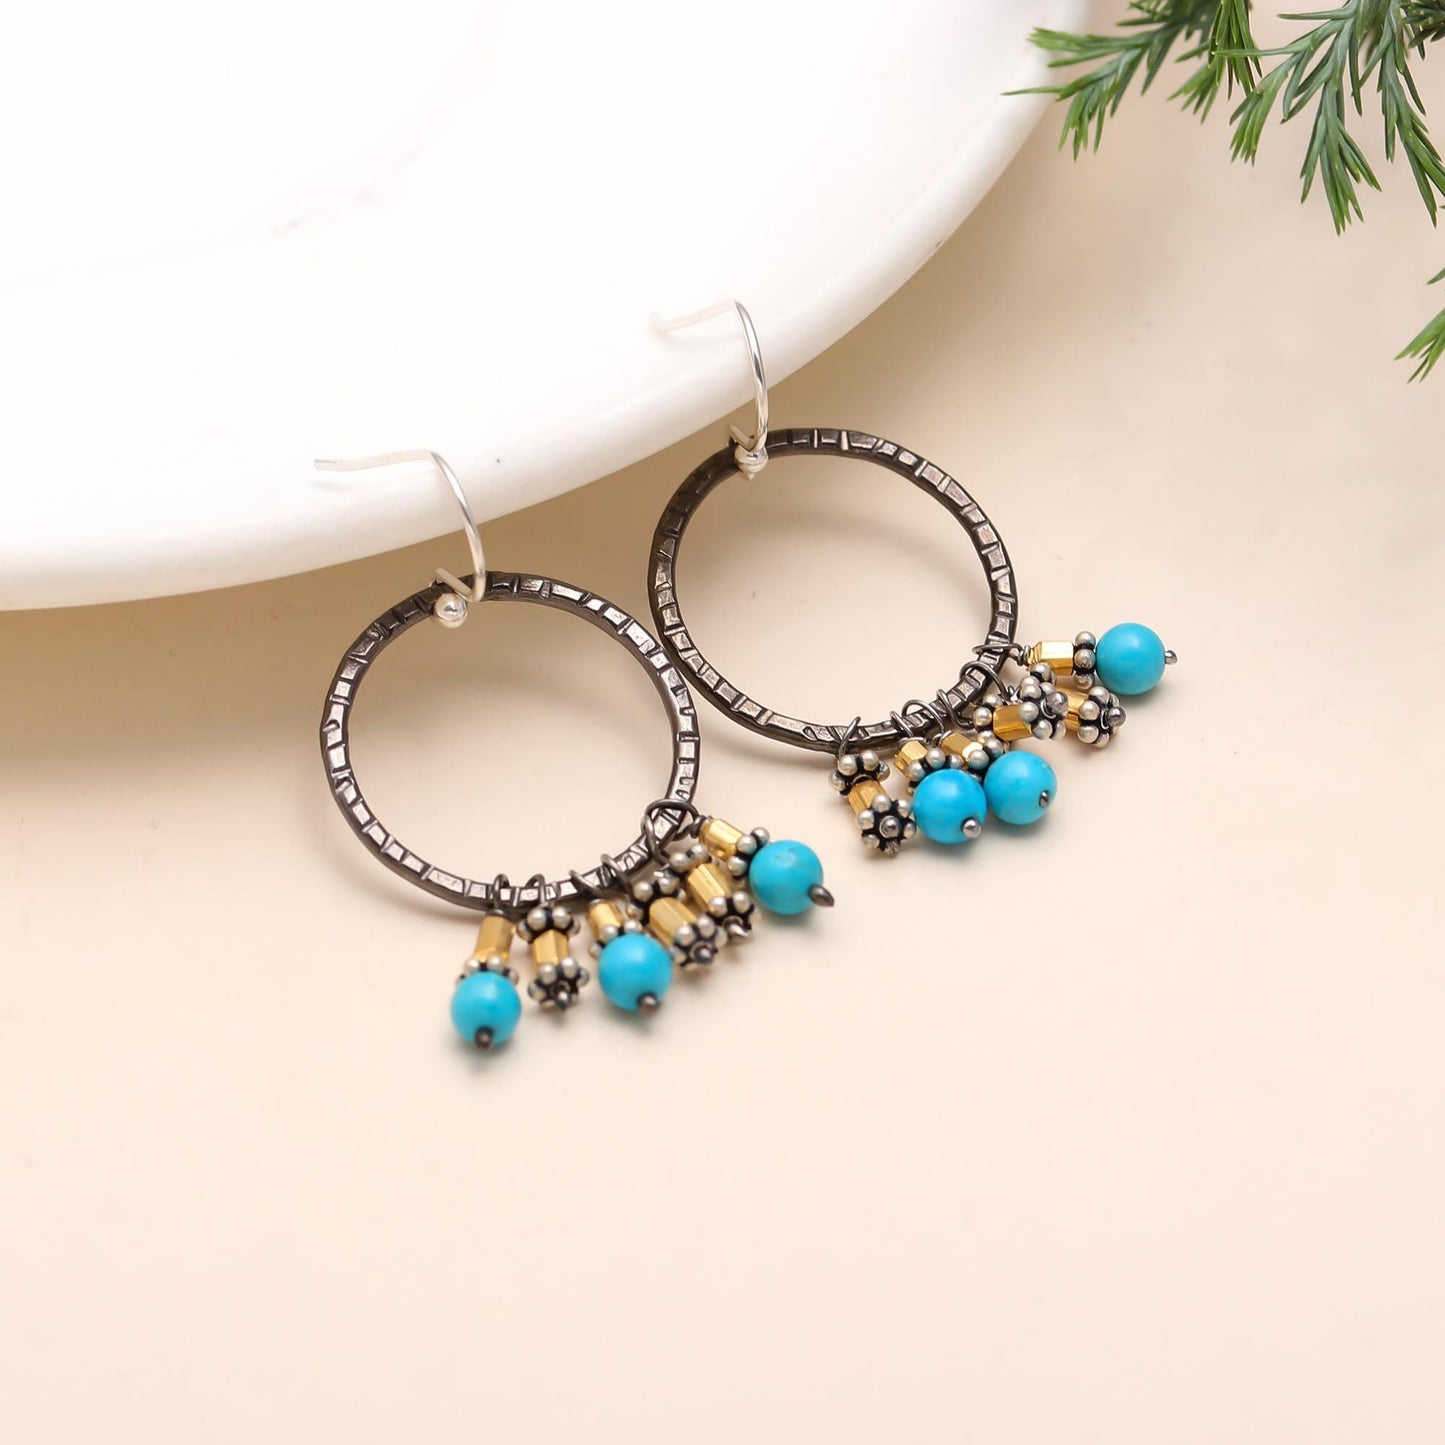 Solid 925 Sterling Silver Turquoise Beads Black Rhodium Earrings, Handmade, Designer, Gift / Birthday / Anniversary, Earwire / Black Rhodium